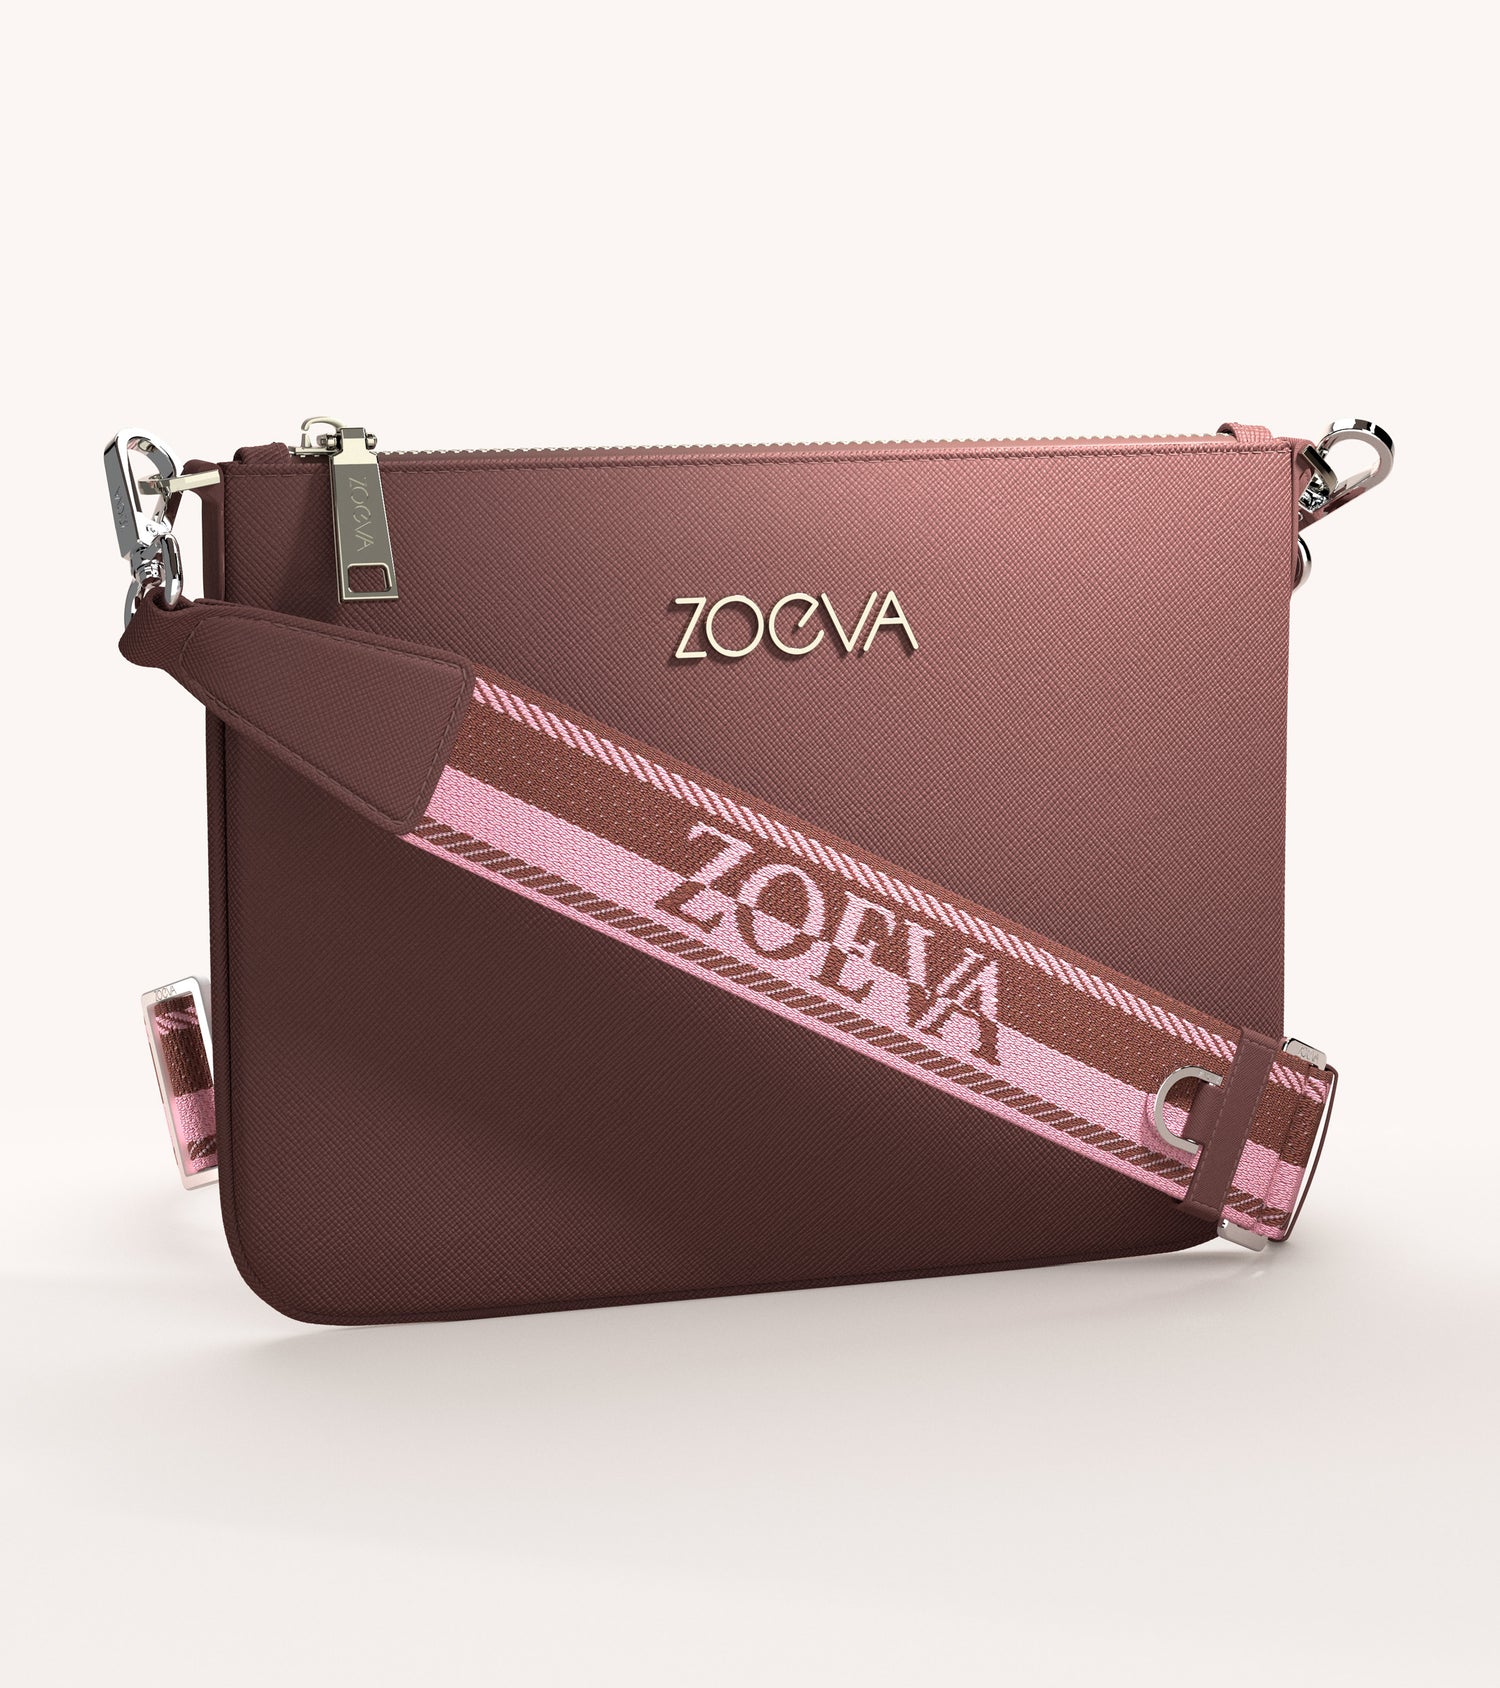 ZOEVA - The Everyday Clutch & Shoulder Strap (BORDEAUX) - ACCESSORIES